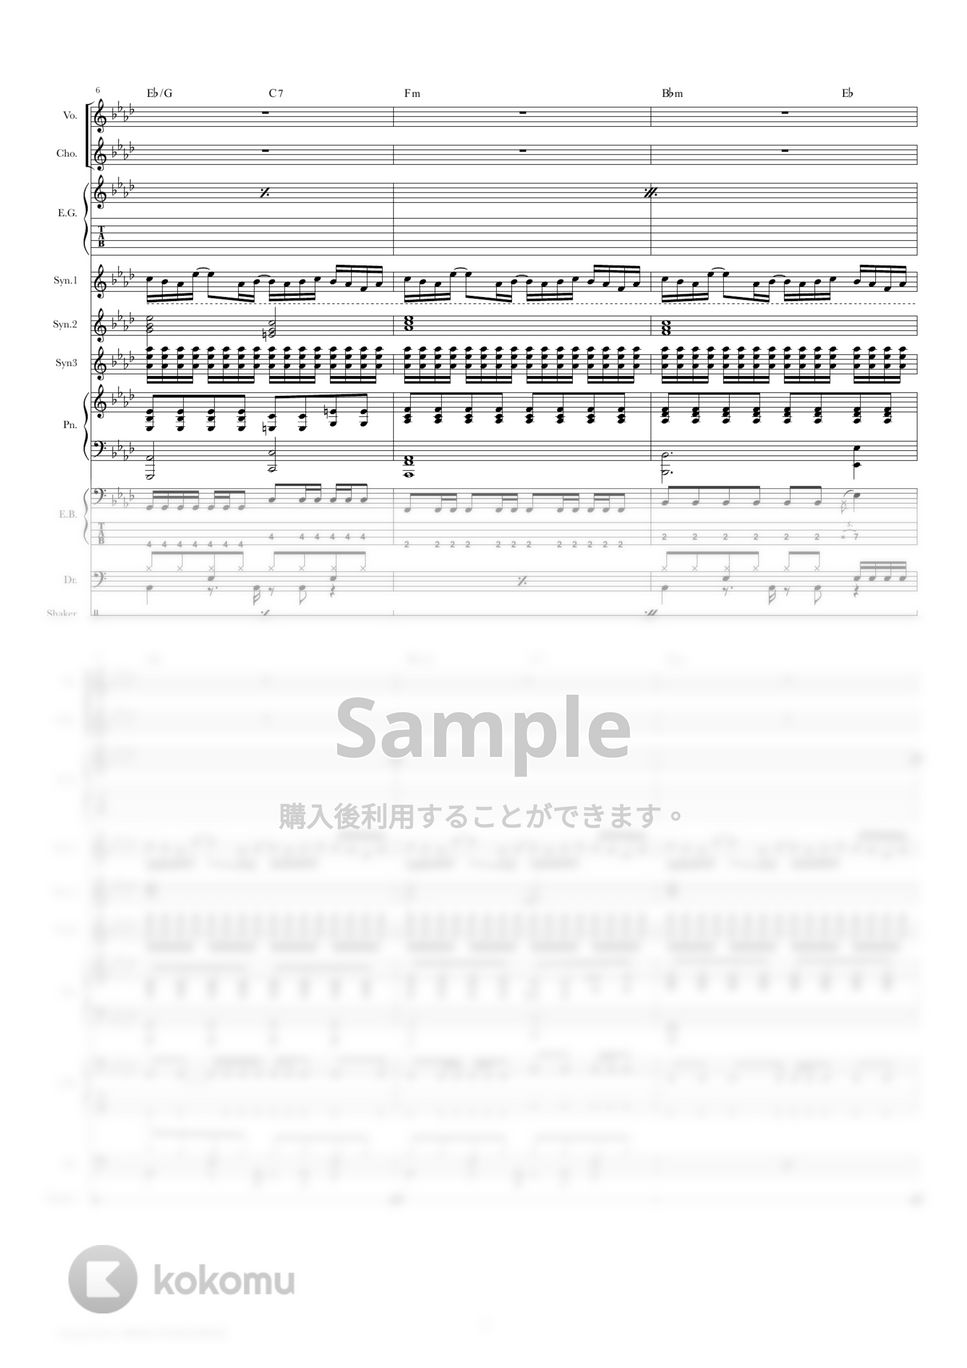 Official髭男dism - Pretender (バンドスコア) by TRIAD GUITAR SCHOOL